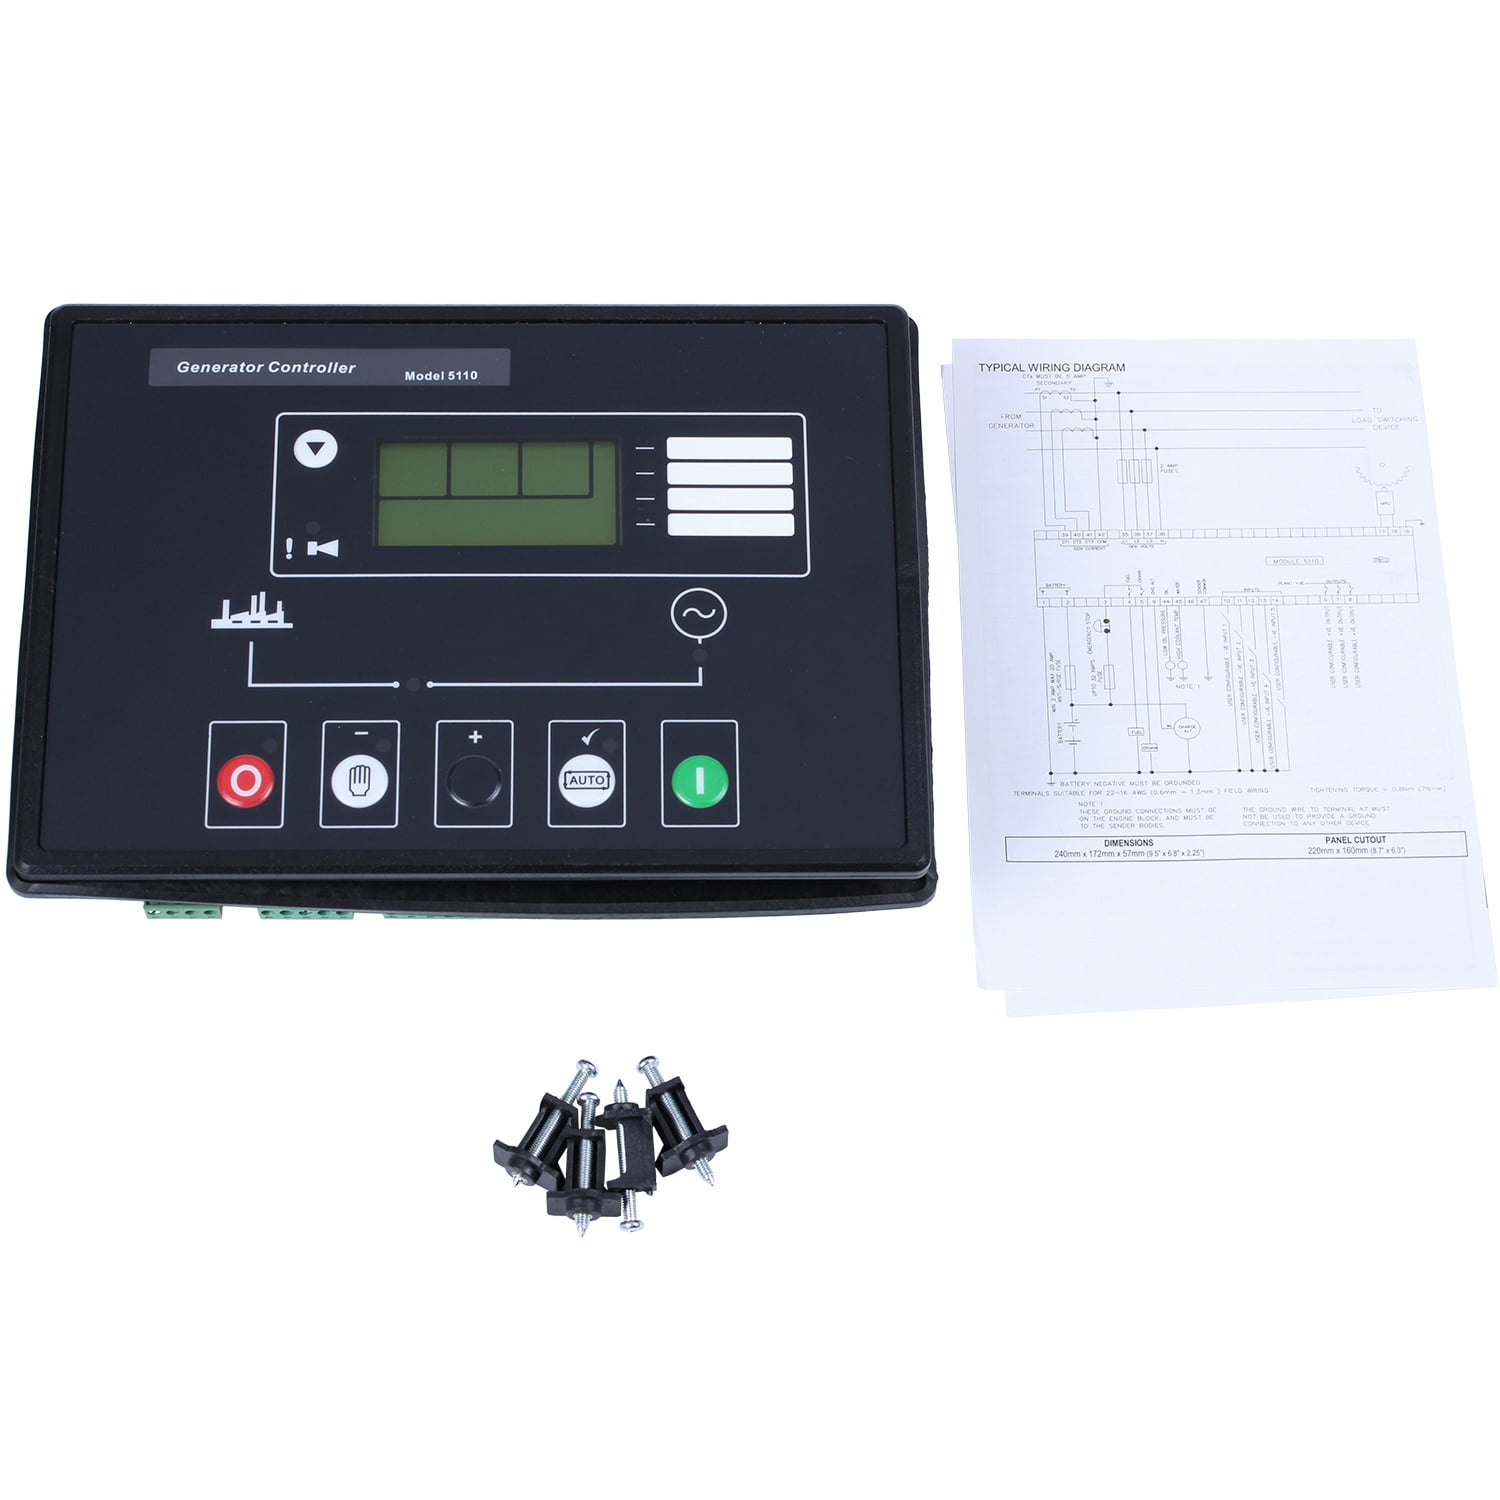 Generator Controller DSE5110 Generator Electronic Controller Module Control Panel LCD Display Manual Start & Stop Module 